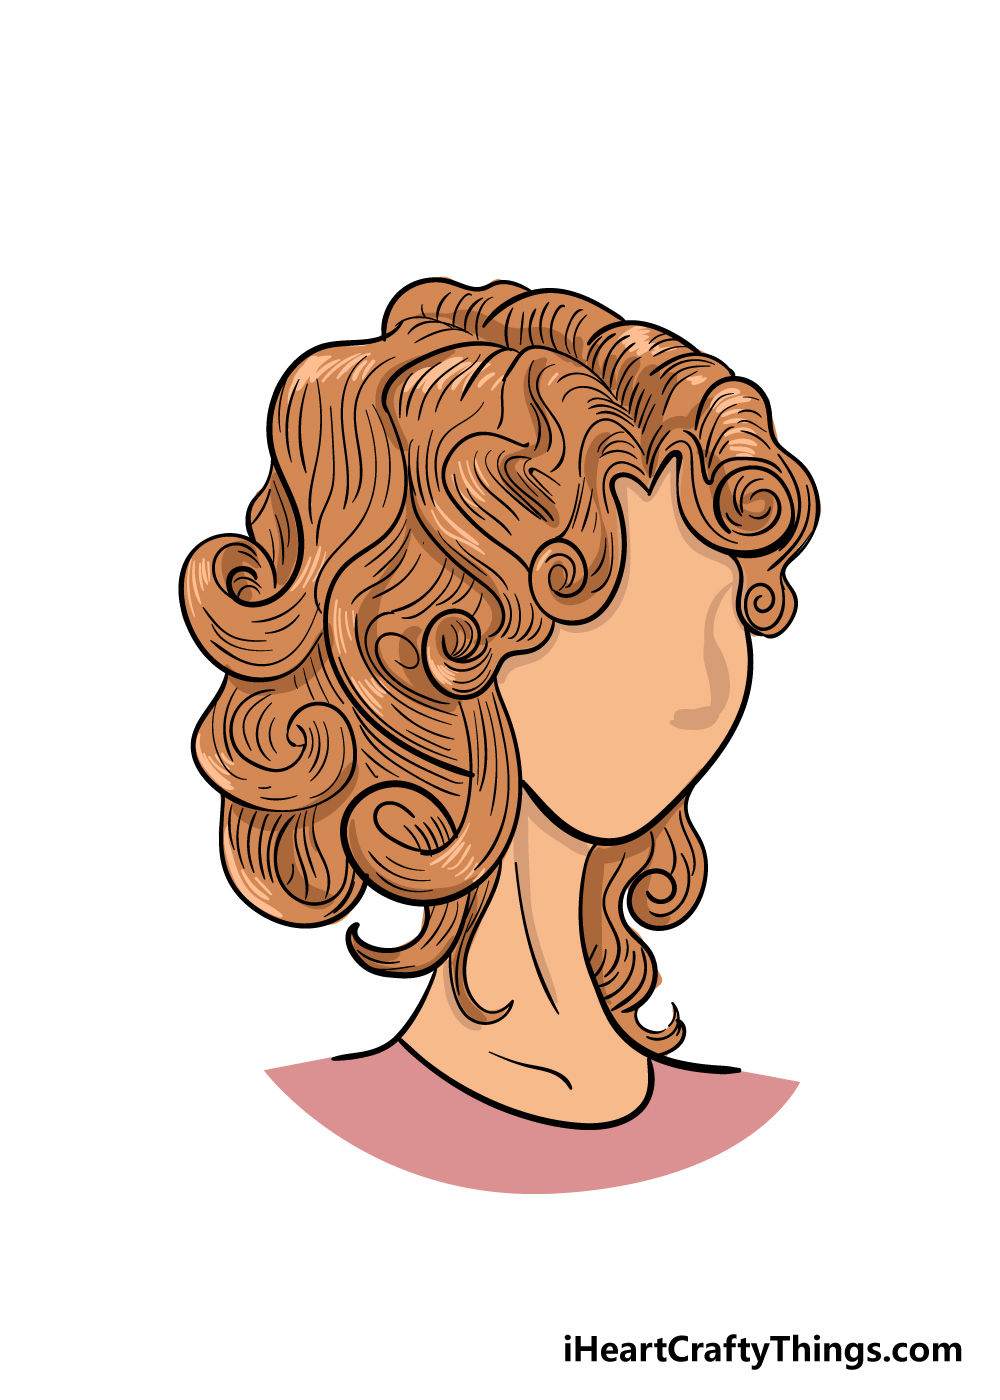 İlayda Hancı - Concept Art for a Girl with Curly Hair